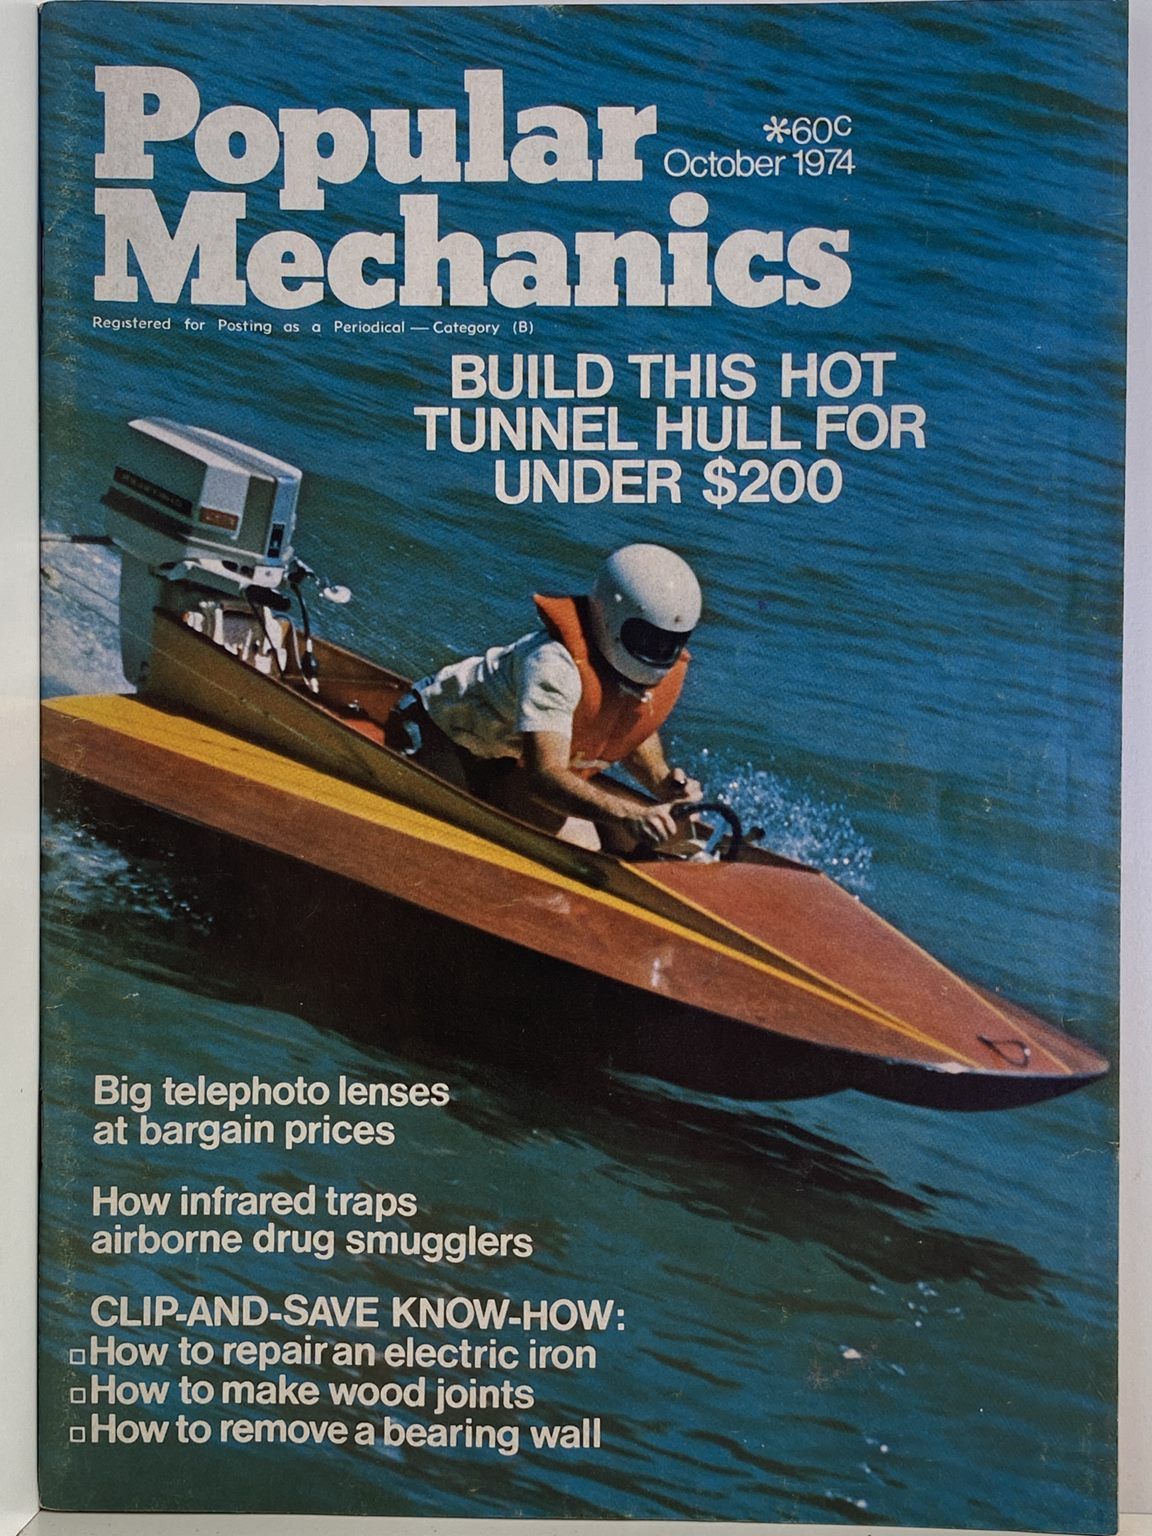 VINTAGE MAGAZINE: Popular Mechanics - Vol. 142, No. 2 - October 1974